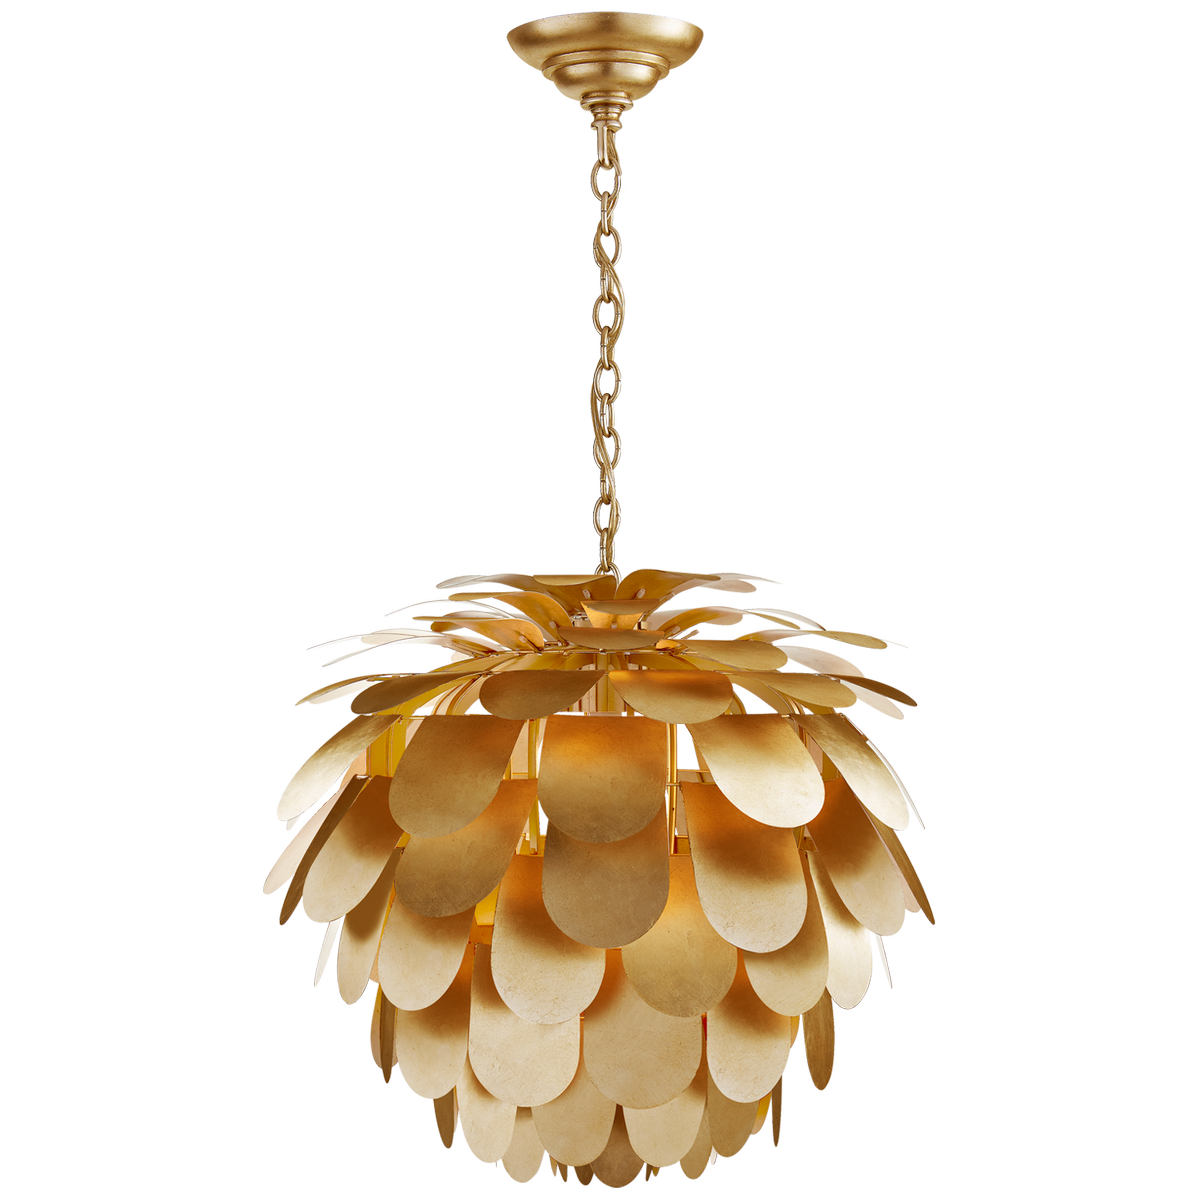 E.F. Chapman Cynara Large chandelier ~ Products \ Lighting